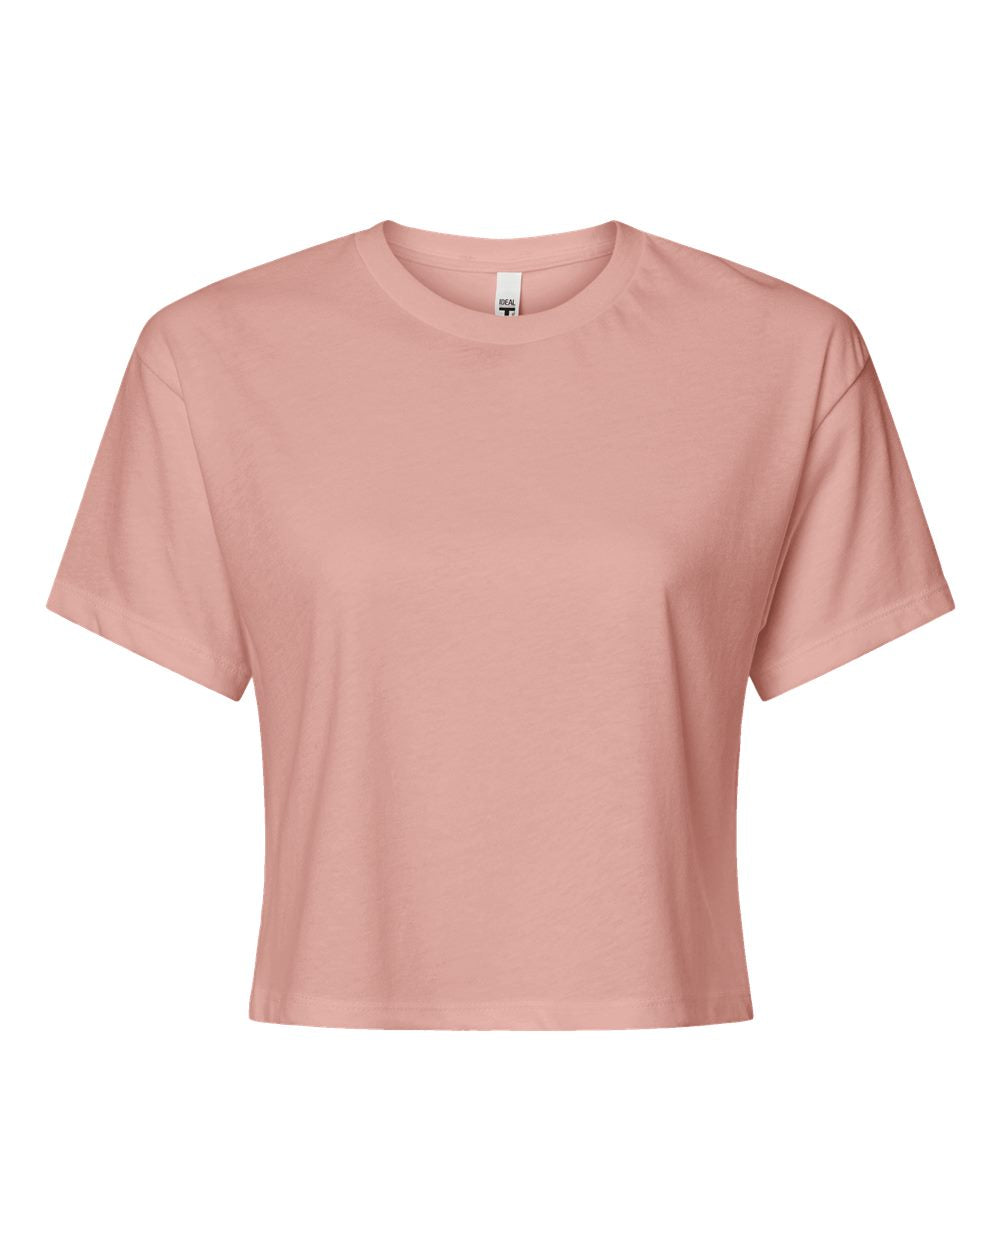 Next Level - Women's Ideal Crop Top - 1580 – Shirts23 - Premium Blank Shirts  & More!